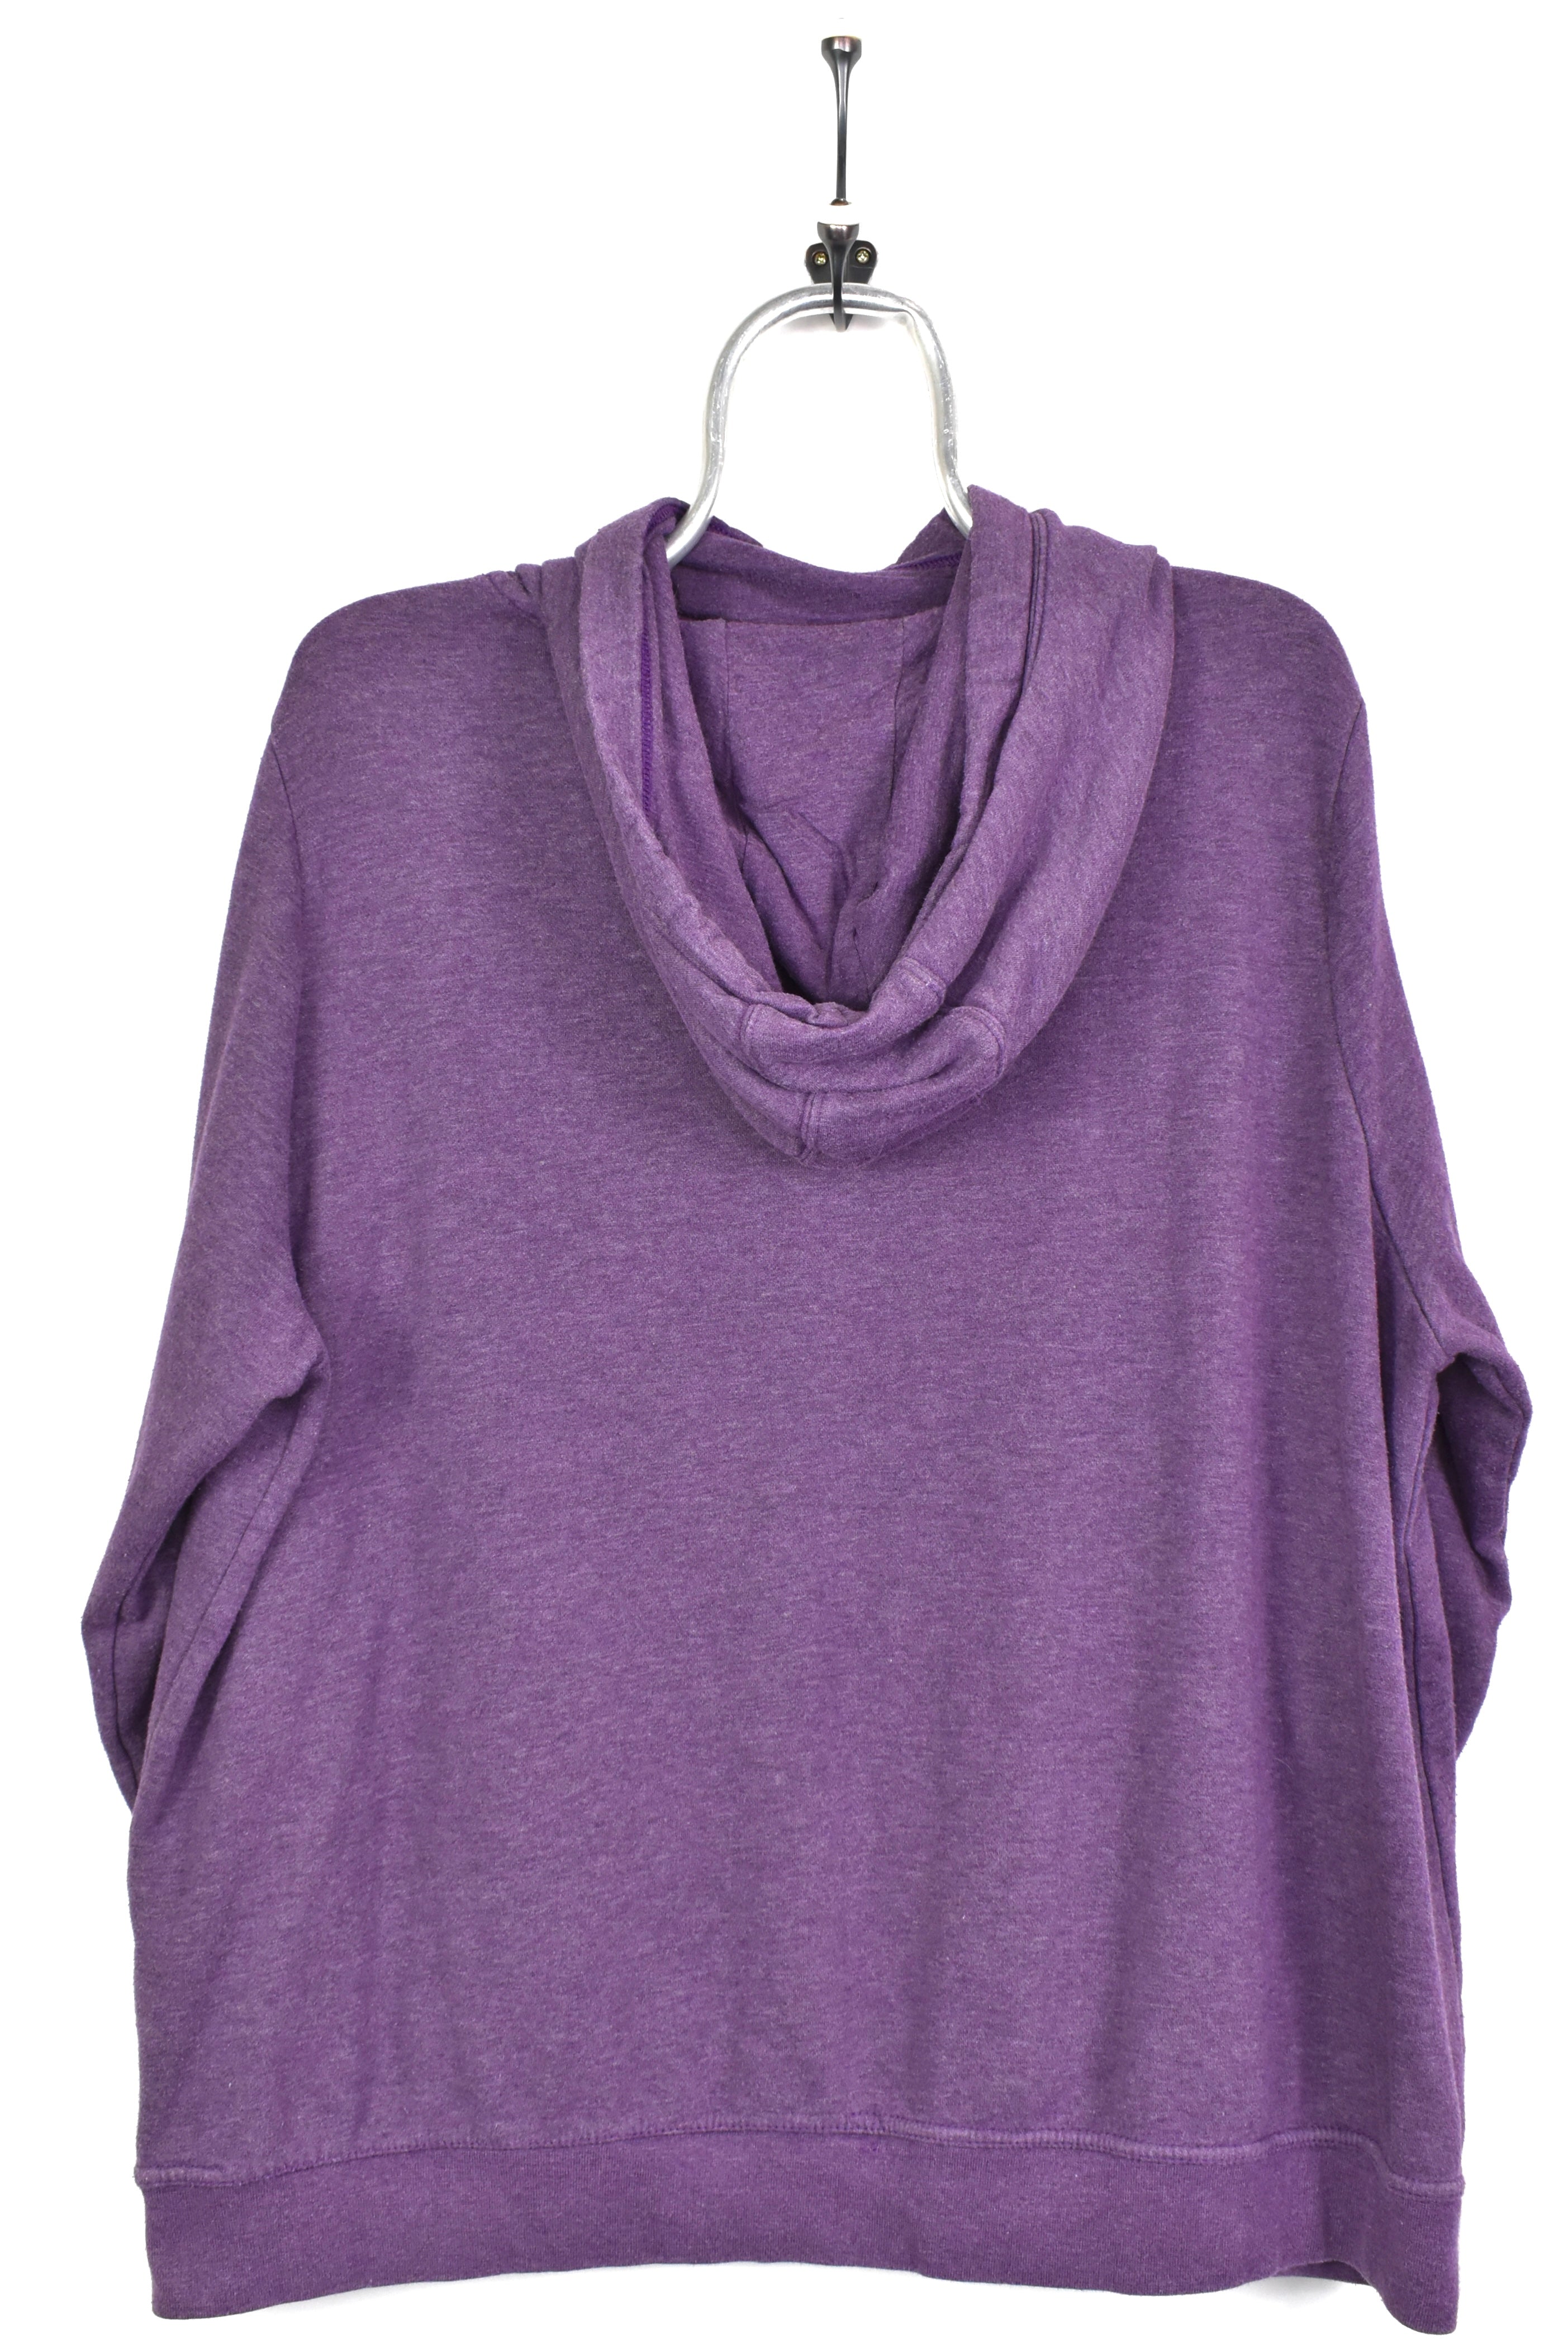 Vintage women's Nike hoodie, pullover embroidered sweatshirt - XXL, purple NIKE